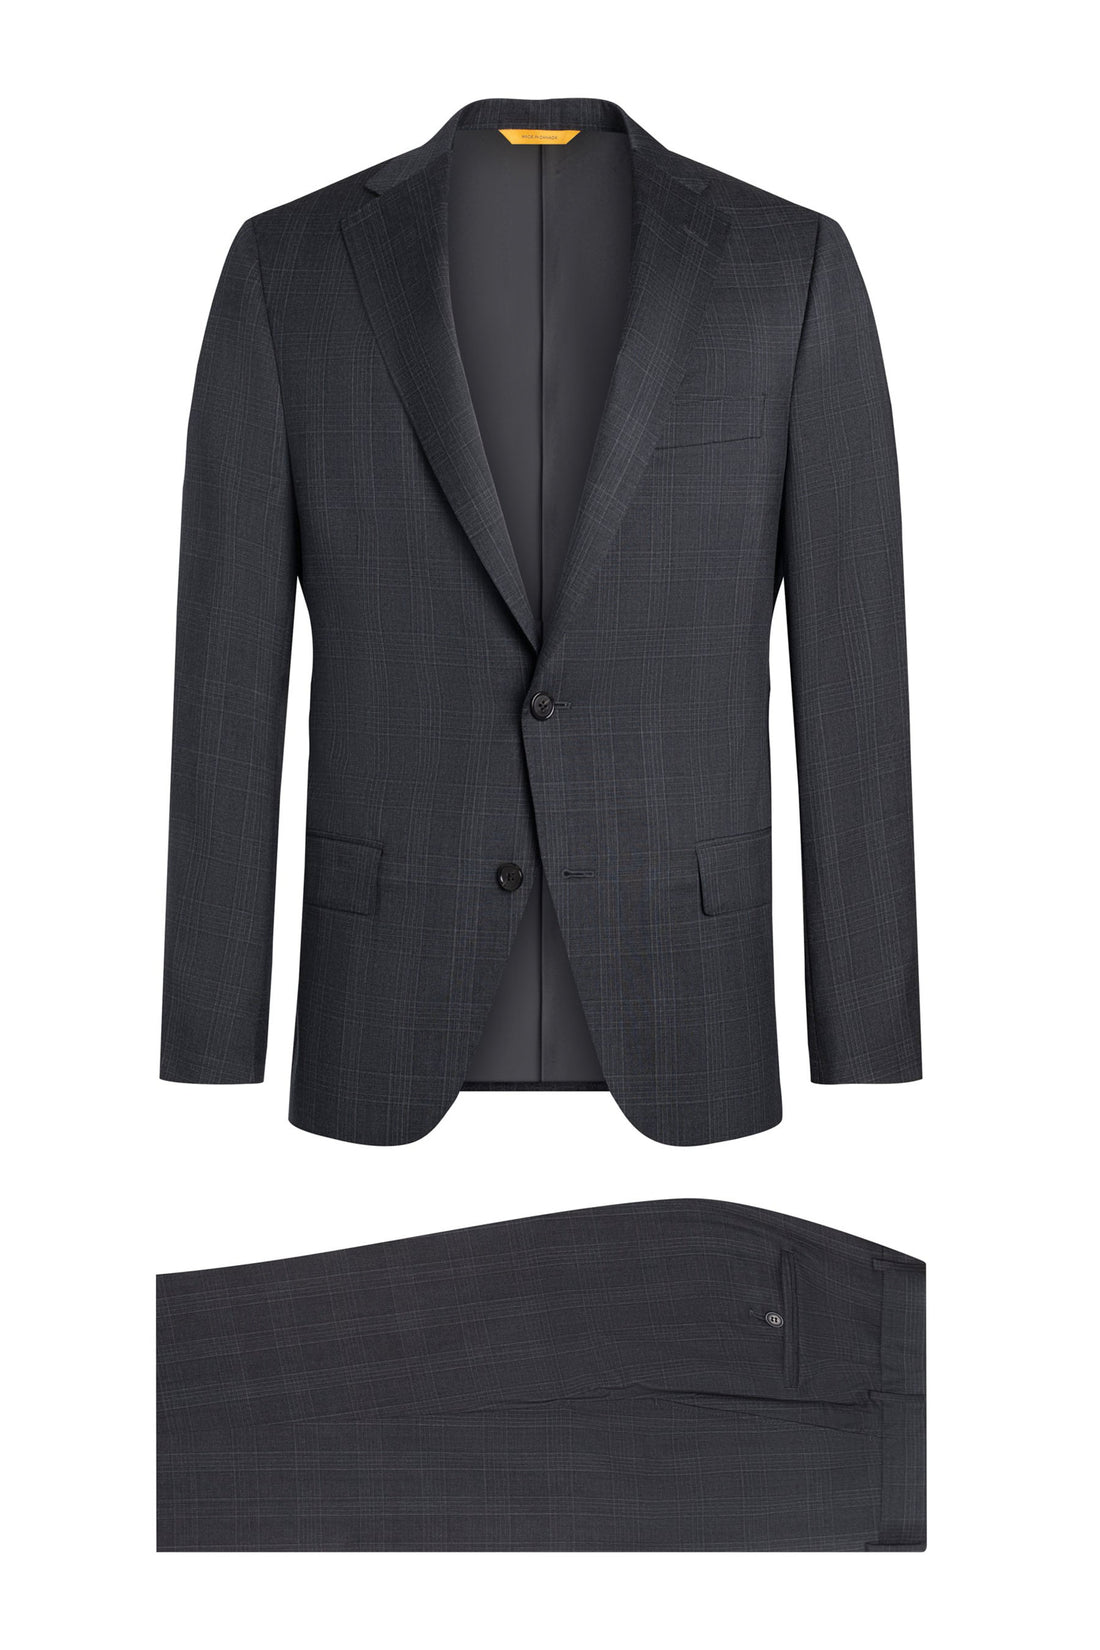 Charcoal Tonal Glen Plaid Wool Suit